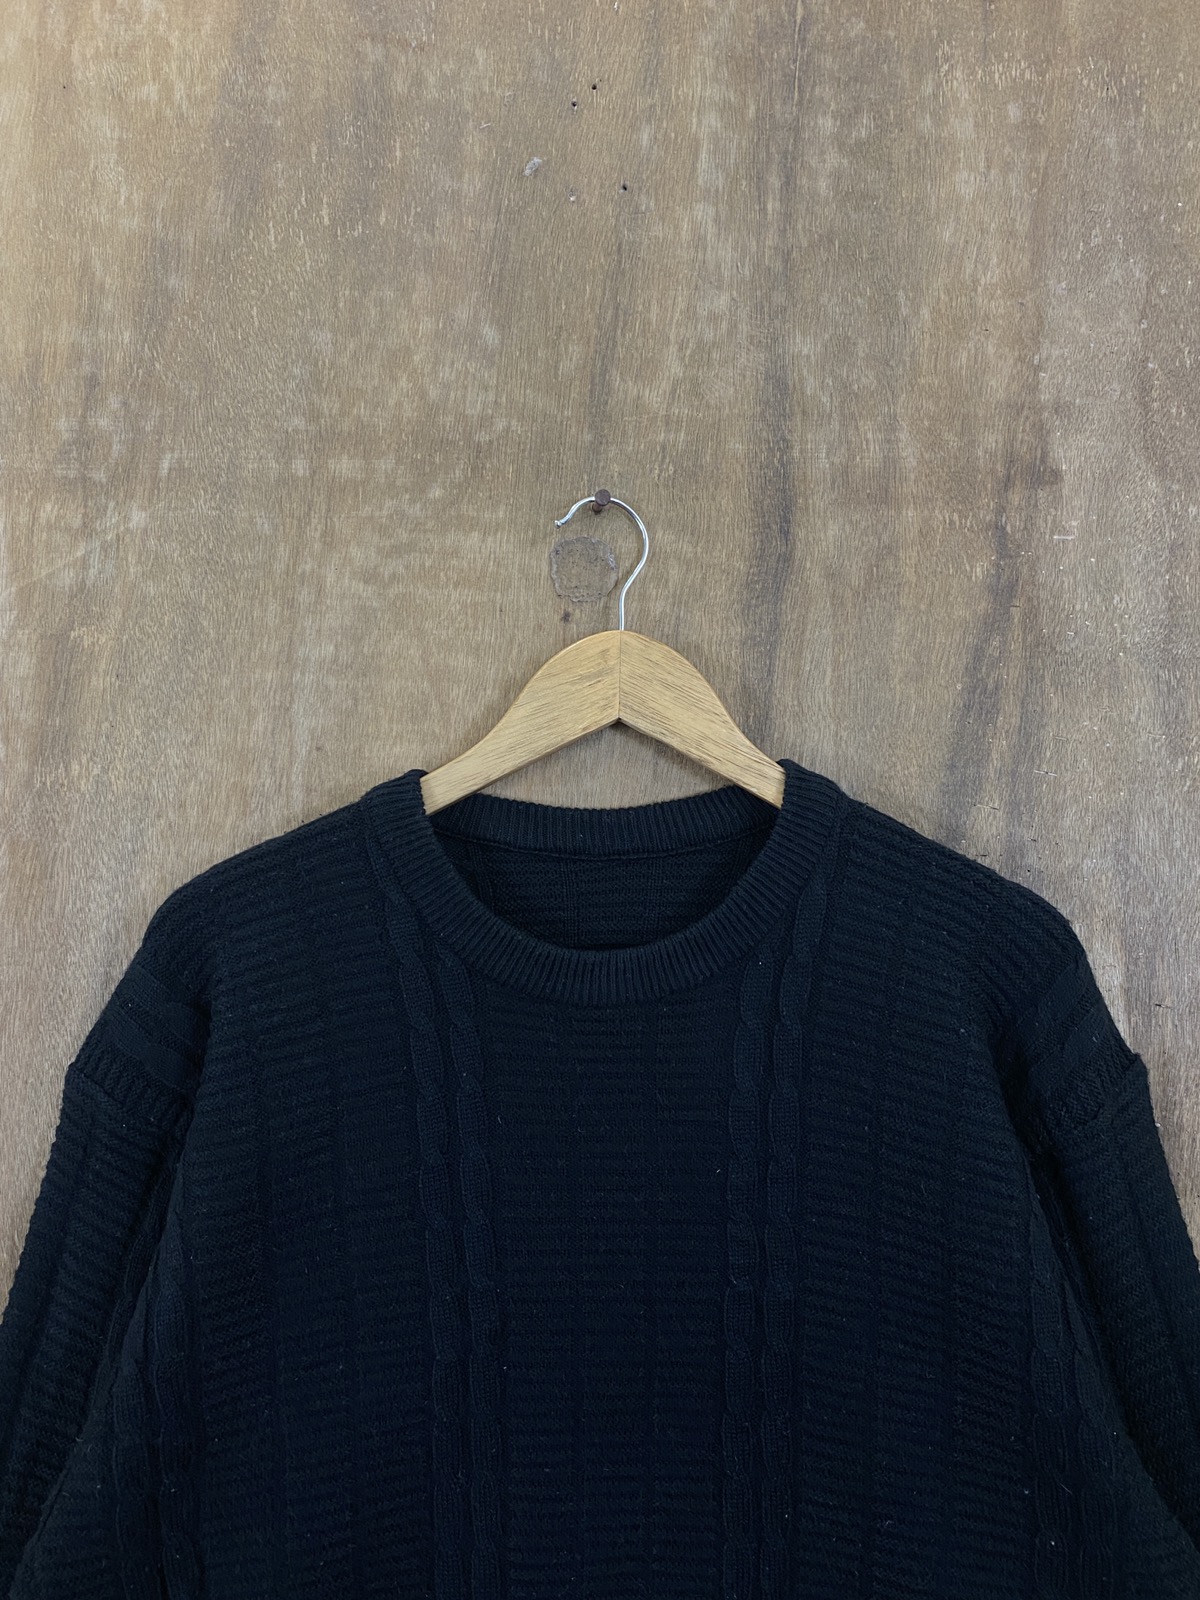 Japanese Brand - Japanese Brand Black Knit Sweaters #1587 - 2